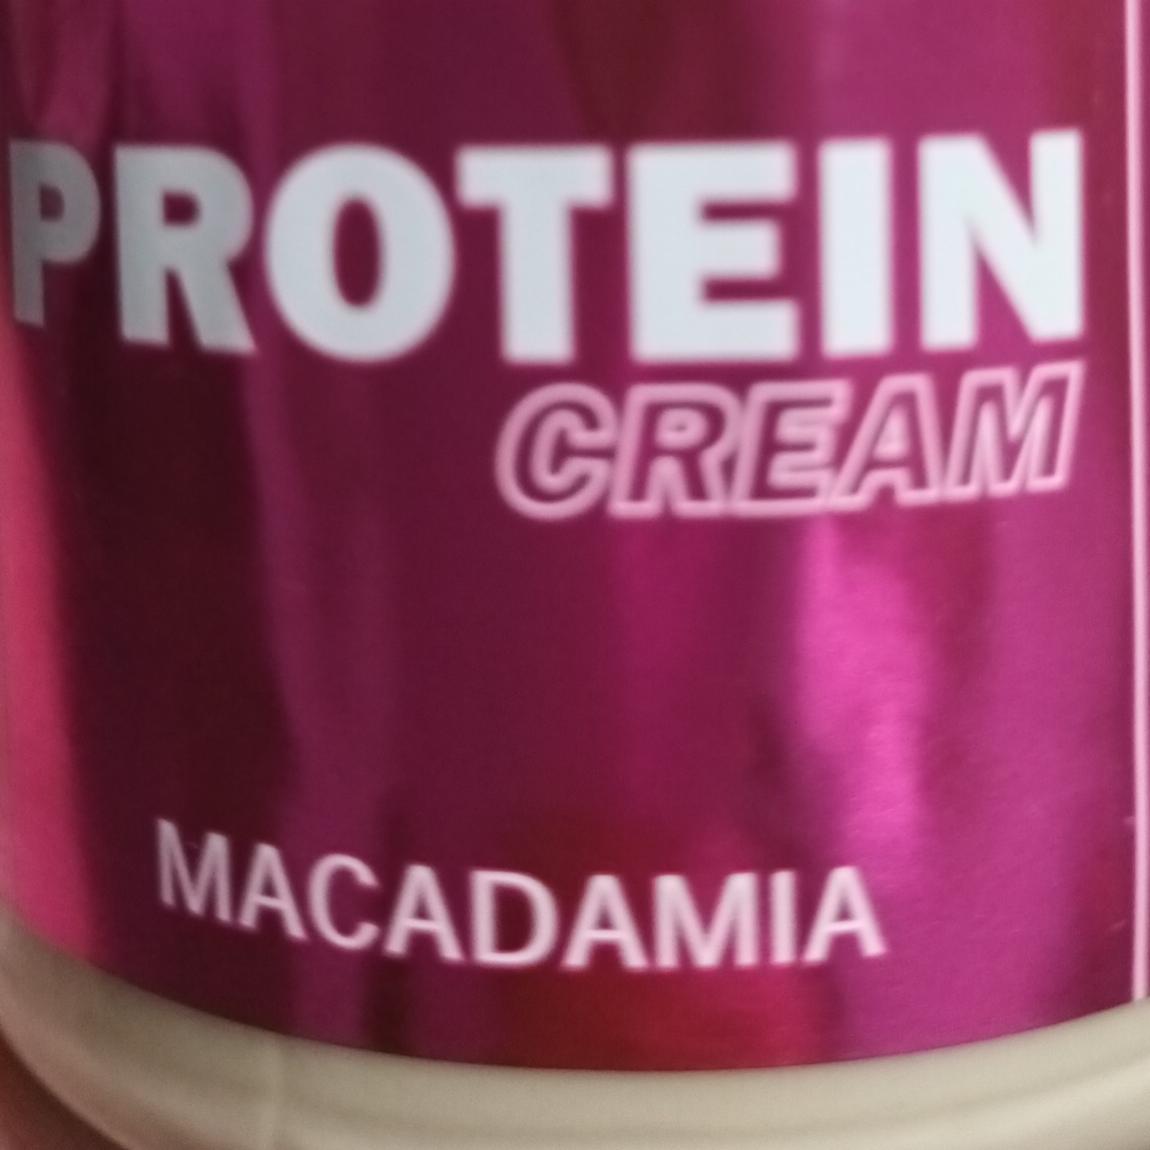 Fotografie - Protein cream macadamia Grashoff